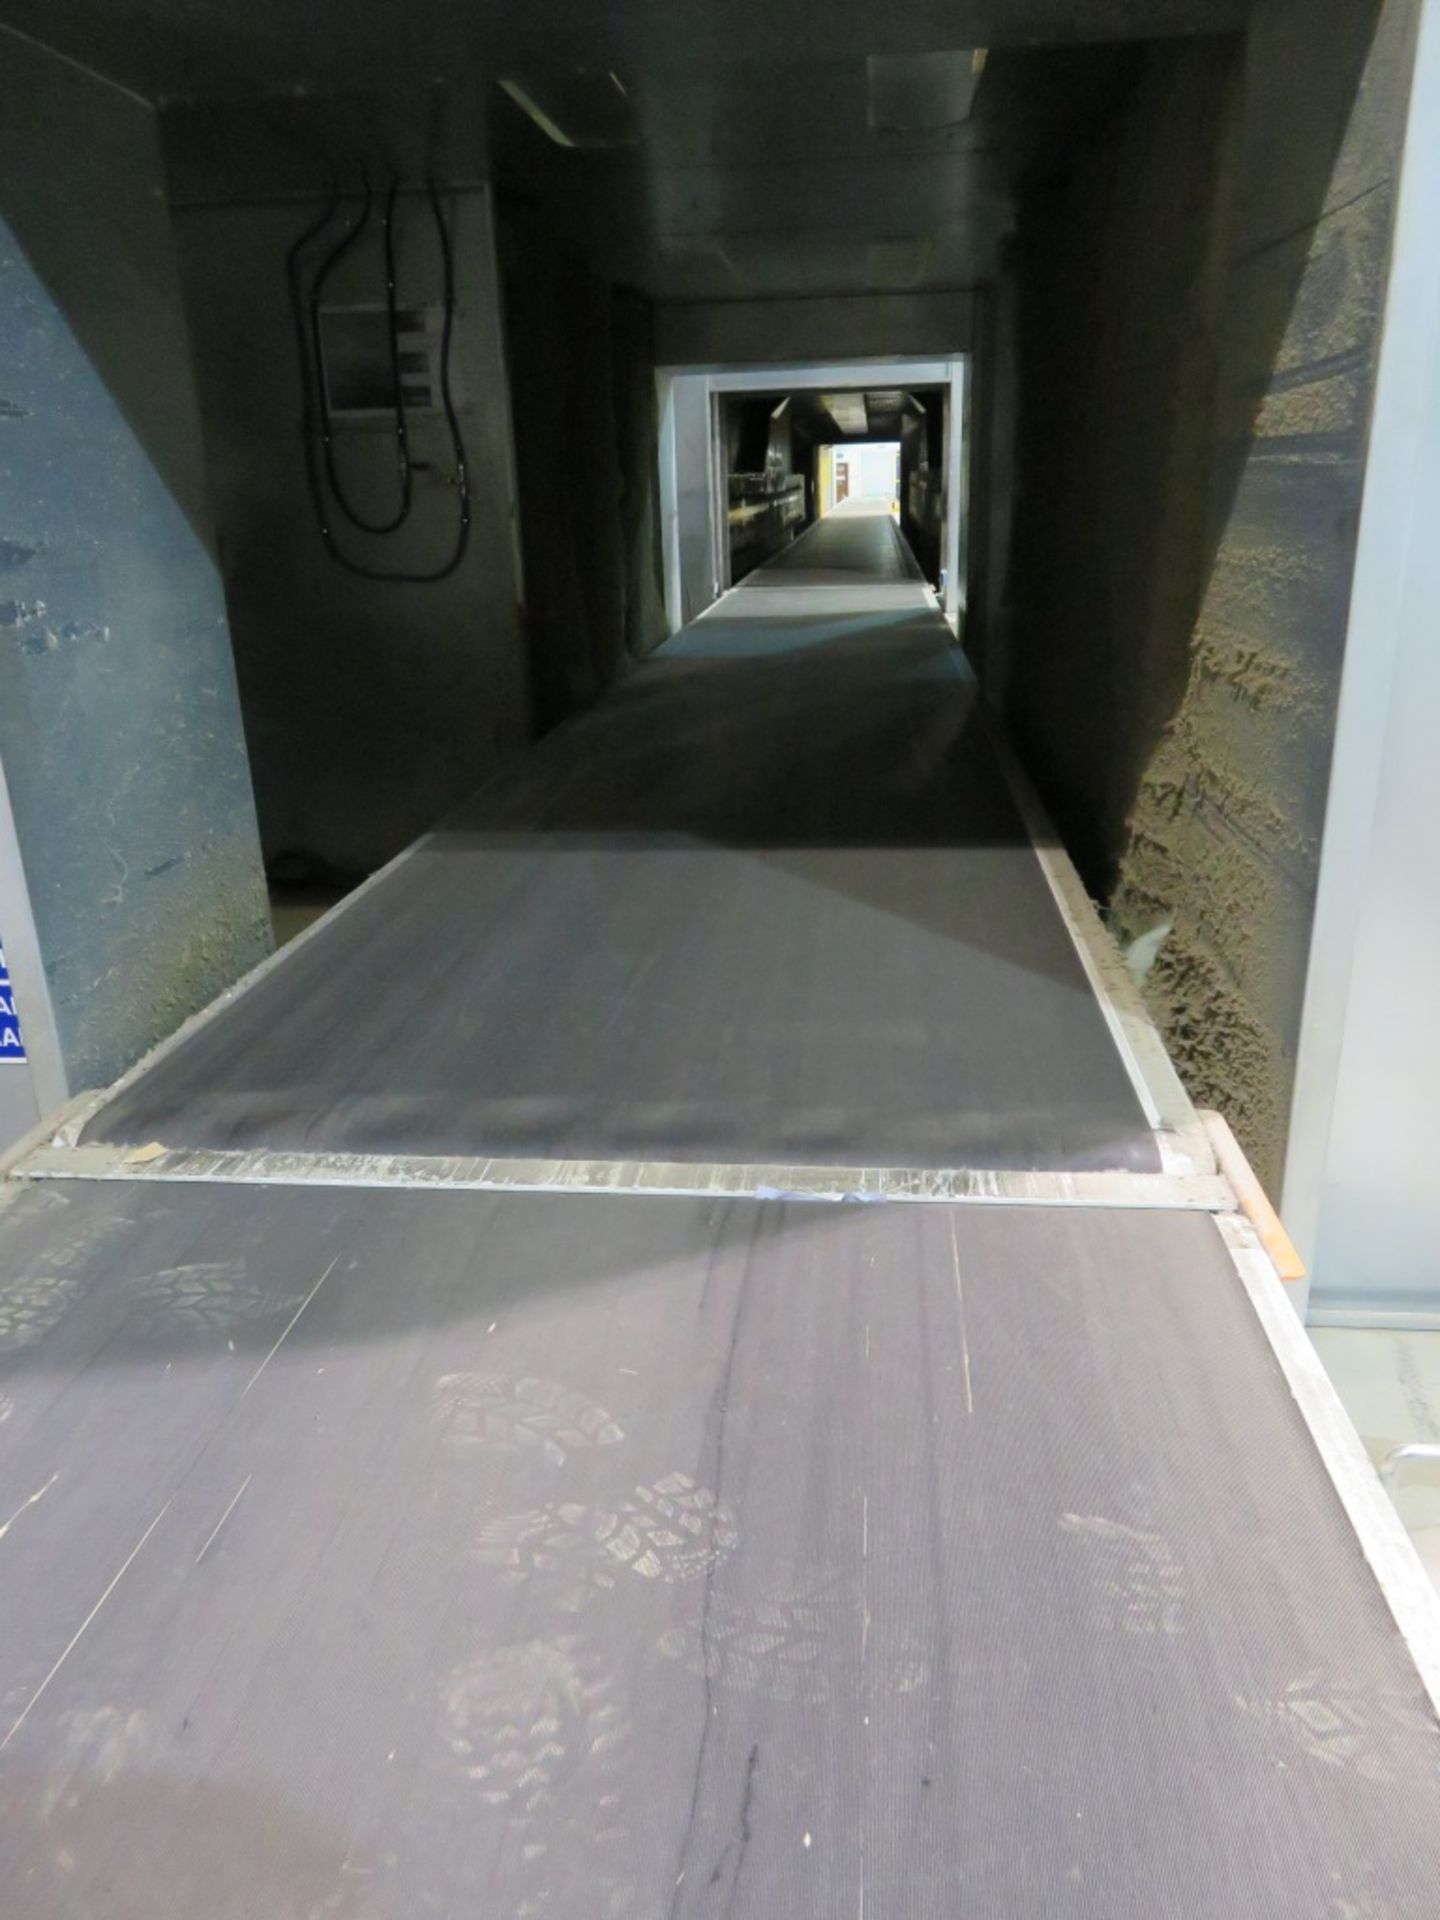 Portec open ended conveyour belt system - Belt width 1.2m (1.3m total width) 0.75m high - - Image 9 of 14